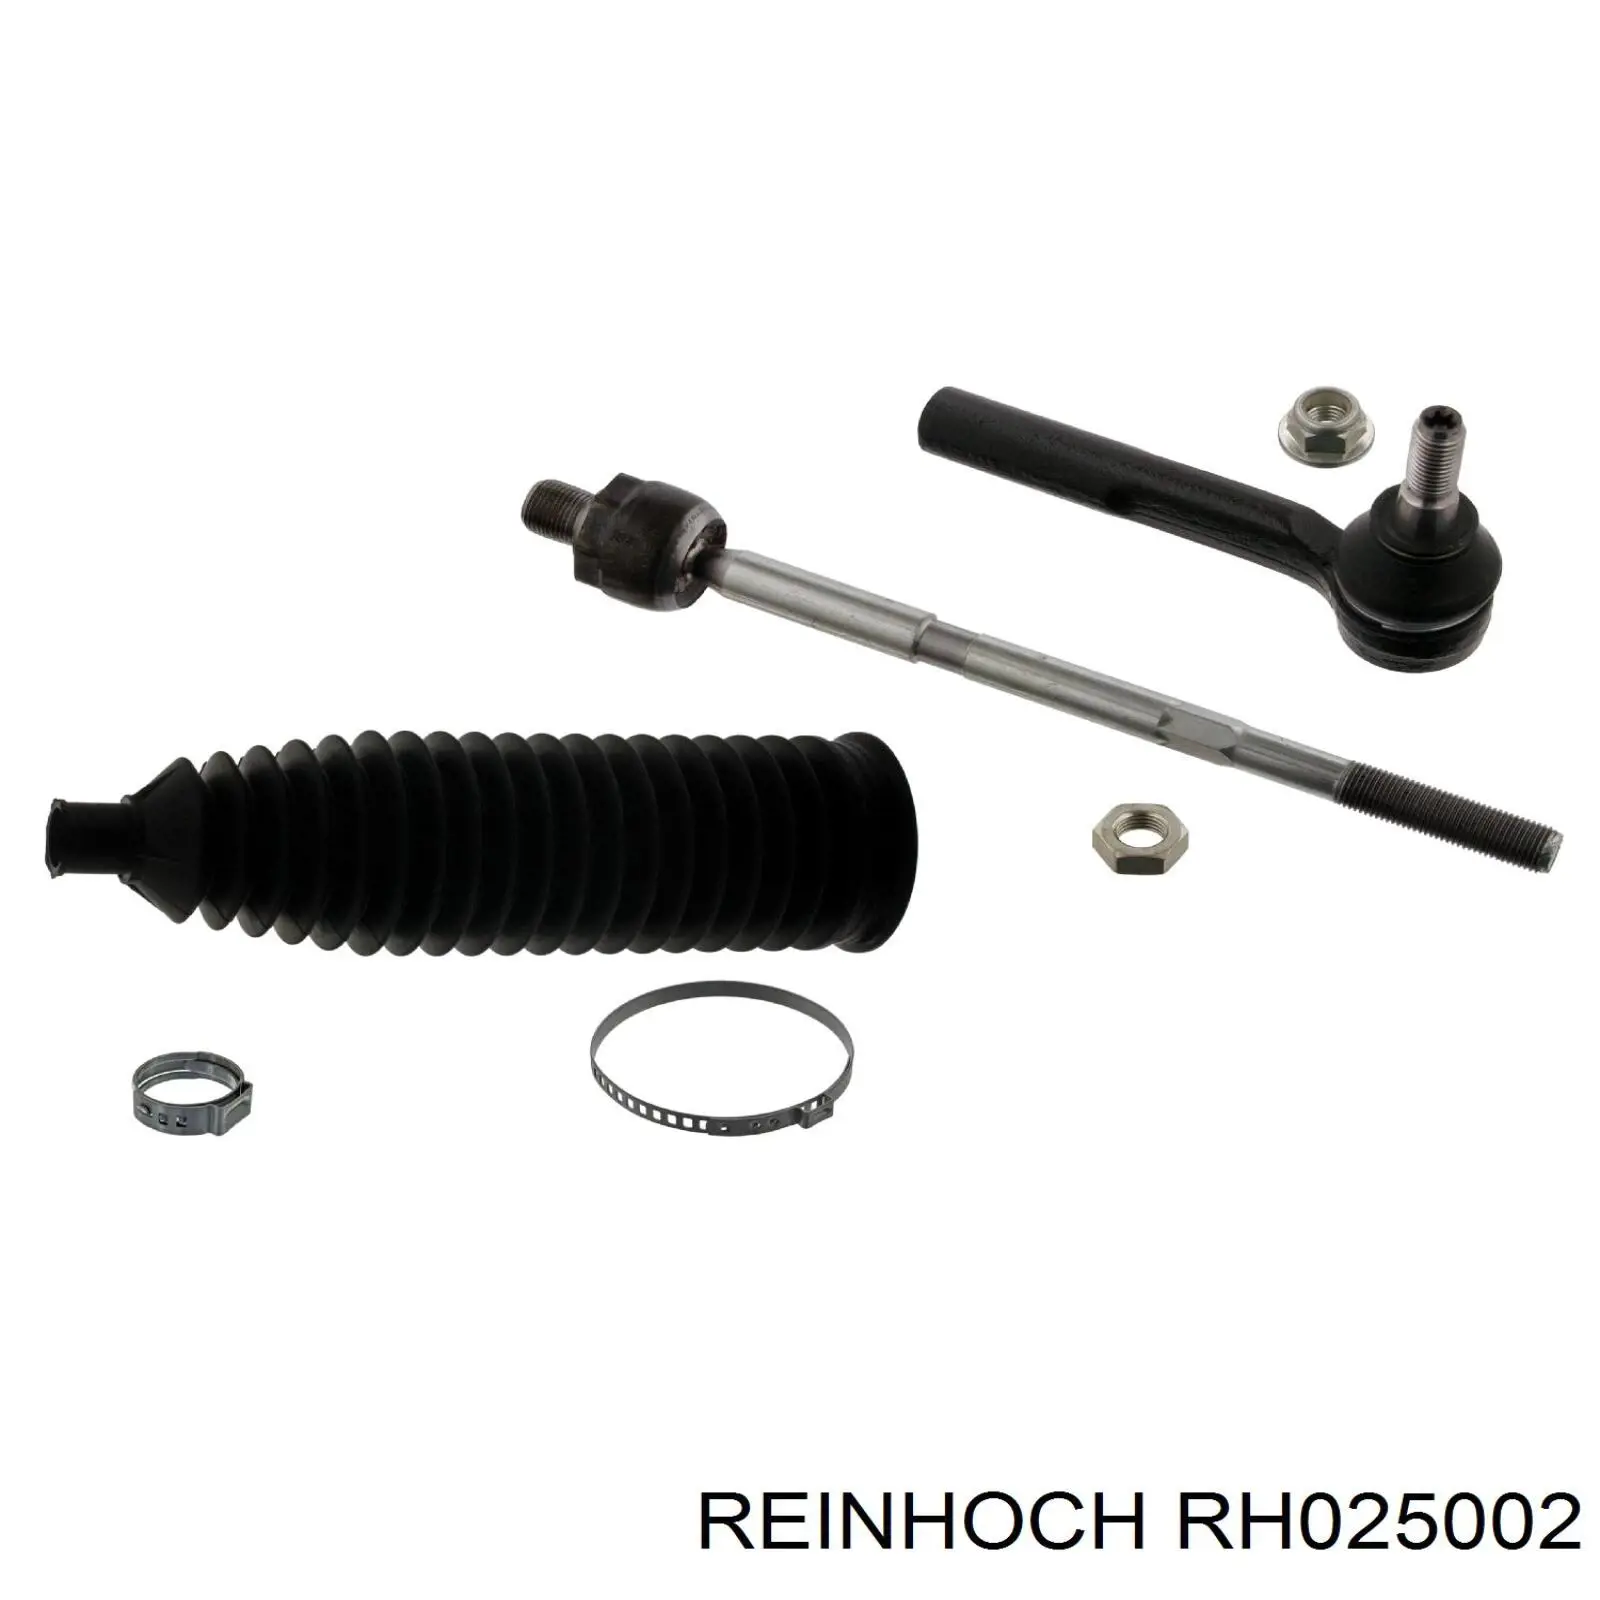 RH025002 Reinhoch barra de acoplamiento